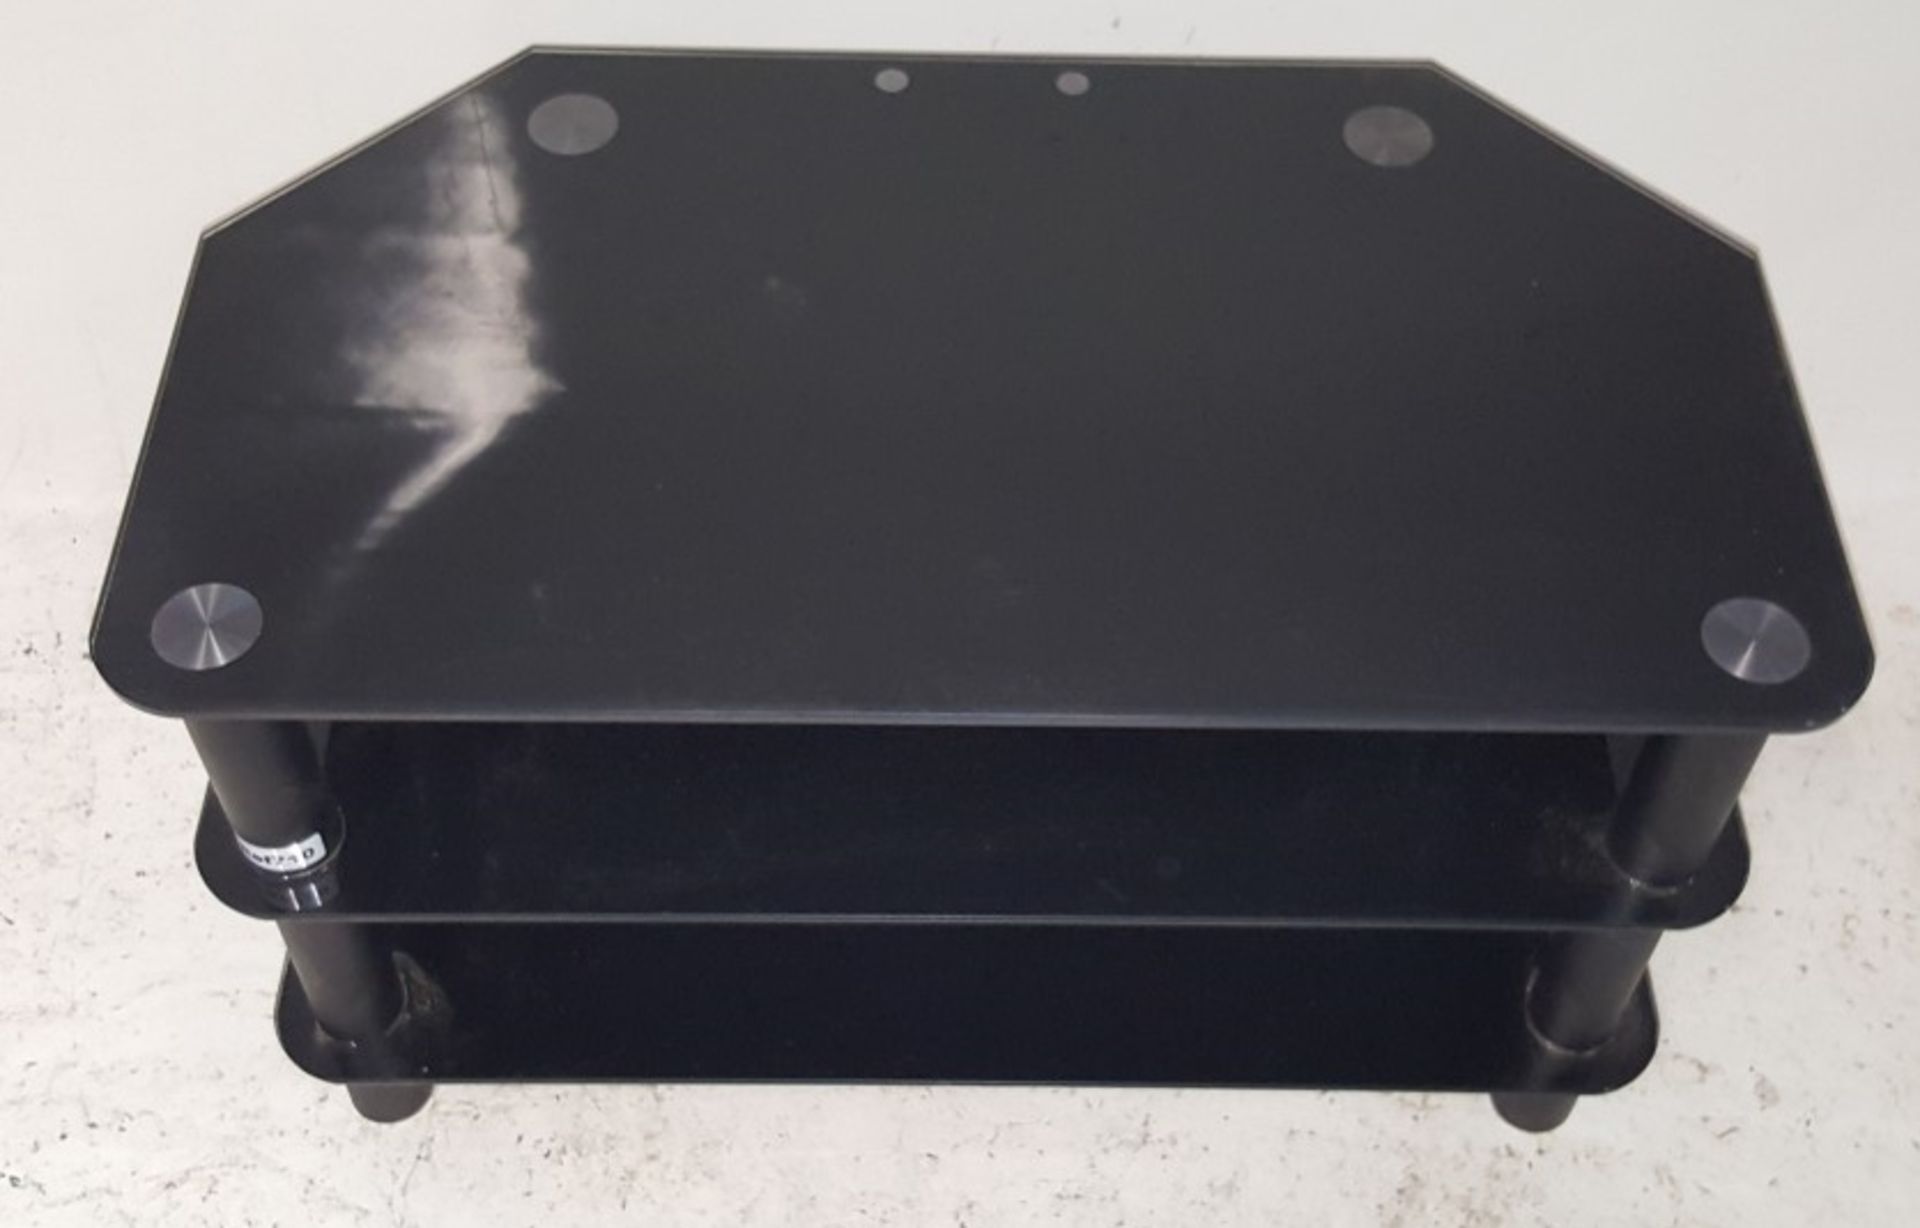 1 x Black Gloss Glass TV Stand 80cm - CL011 - Location: Altrincham WA14 - REF: Ref710 - Image 3 of 4